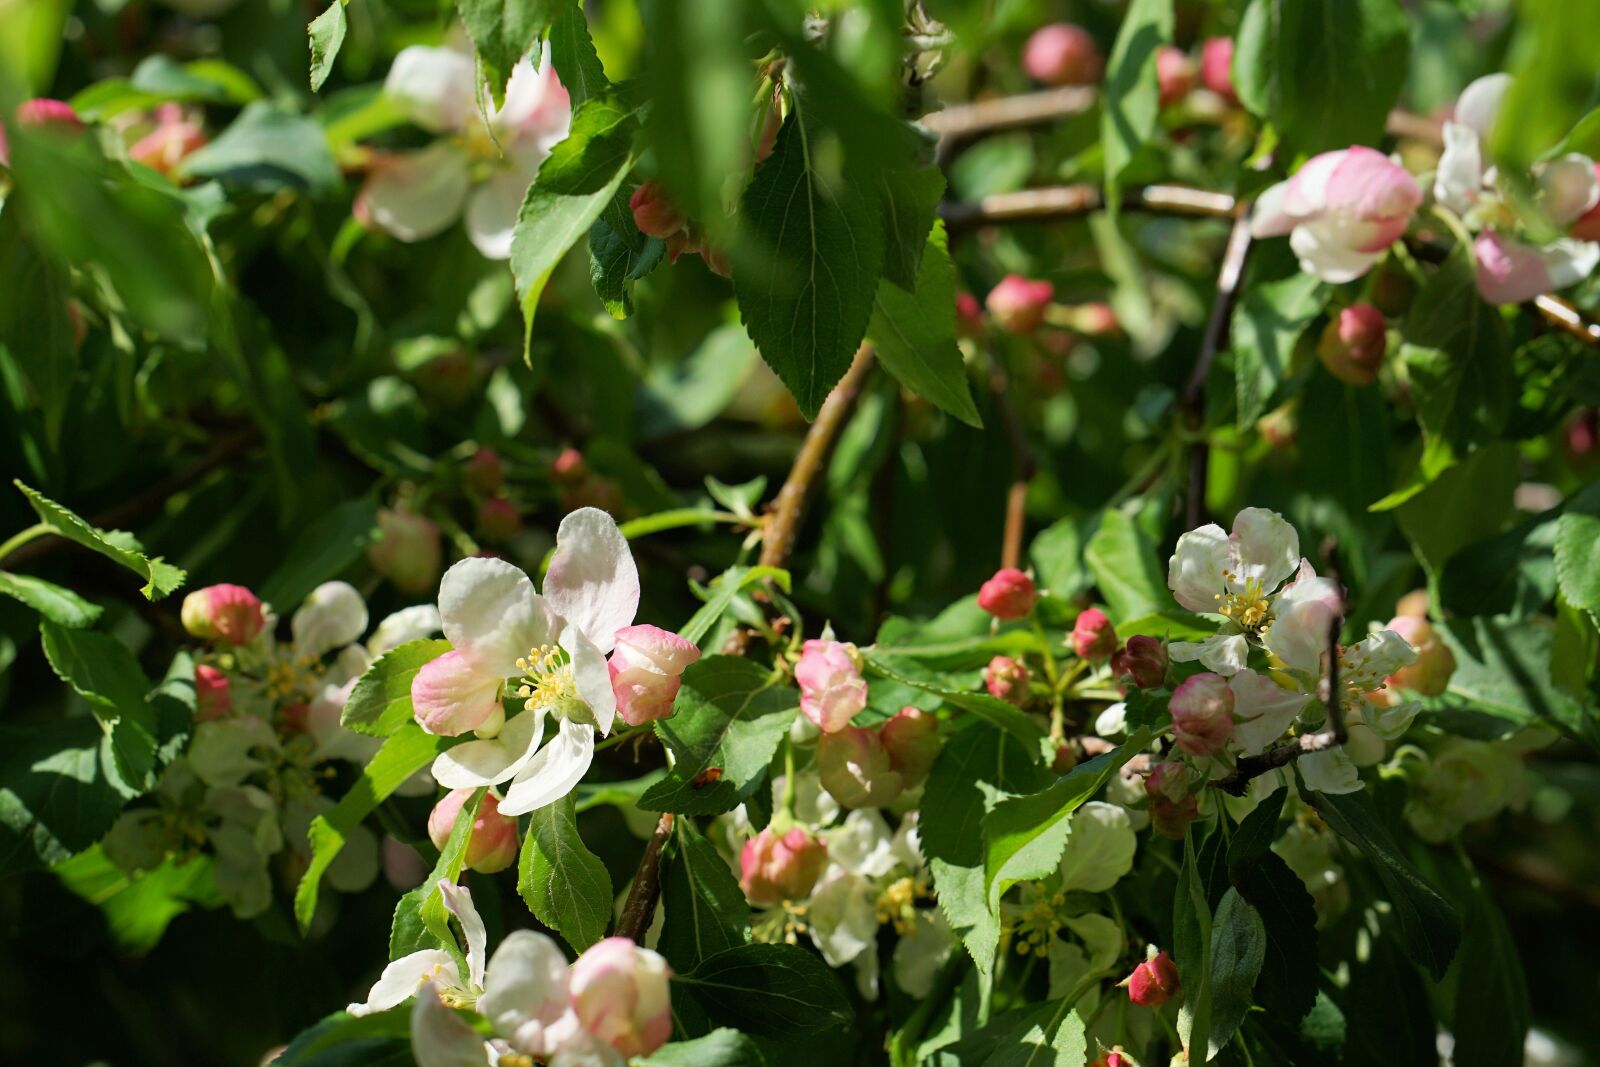 ZEISS Batis 85mm F1.8 sample photo. Apple blossom, embellishment, spring photography